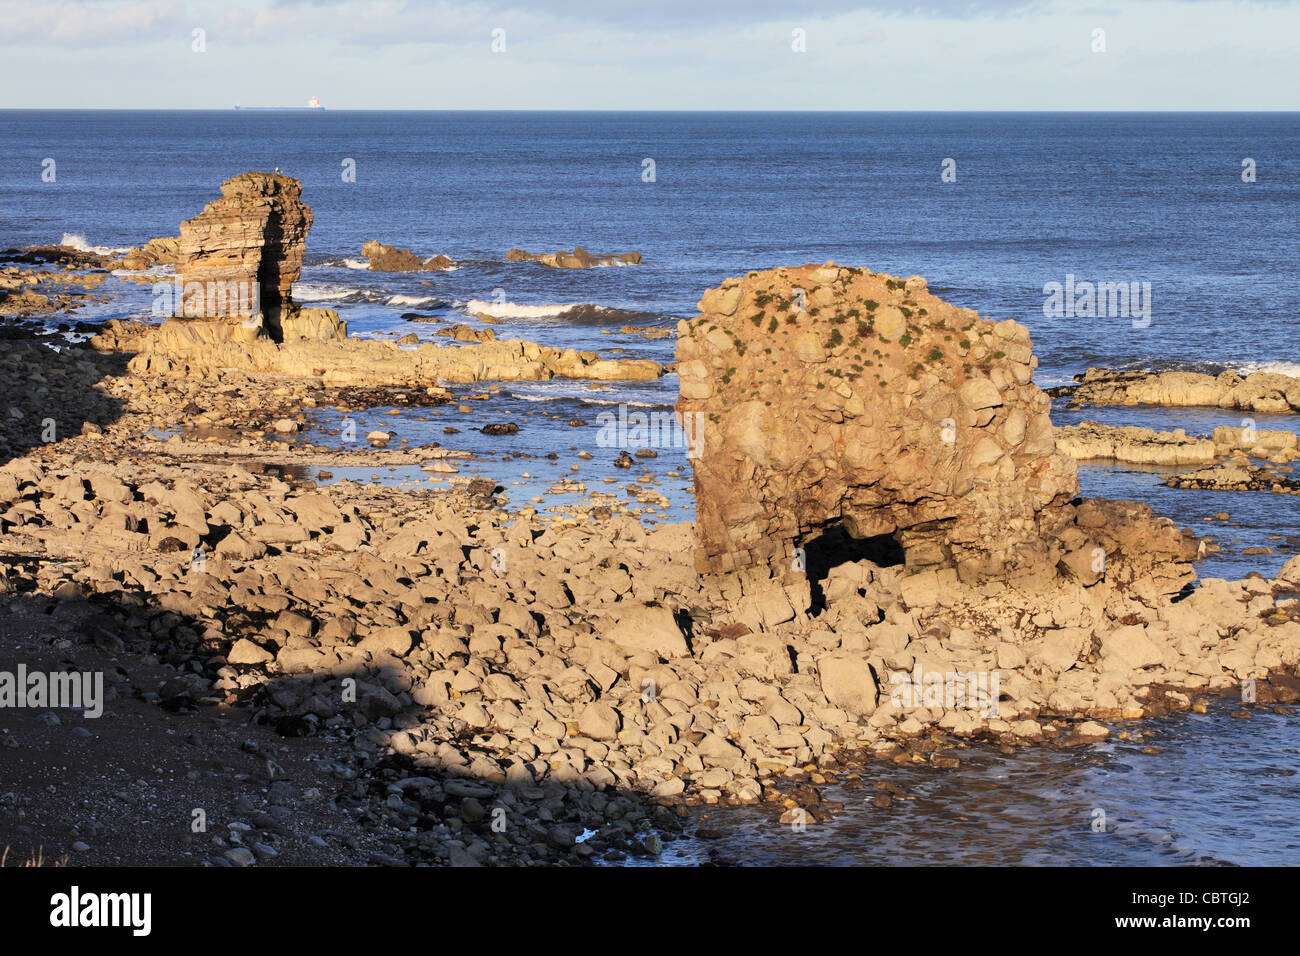 North sea coastline near Whitburn, north east England, UK Stock Photo